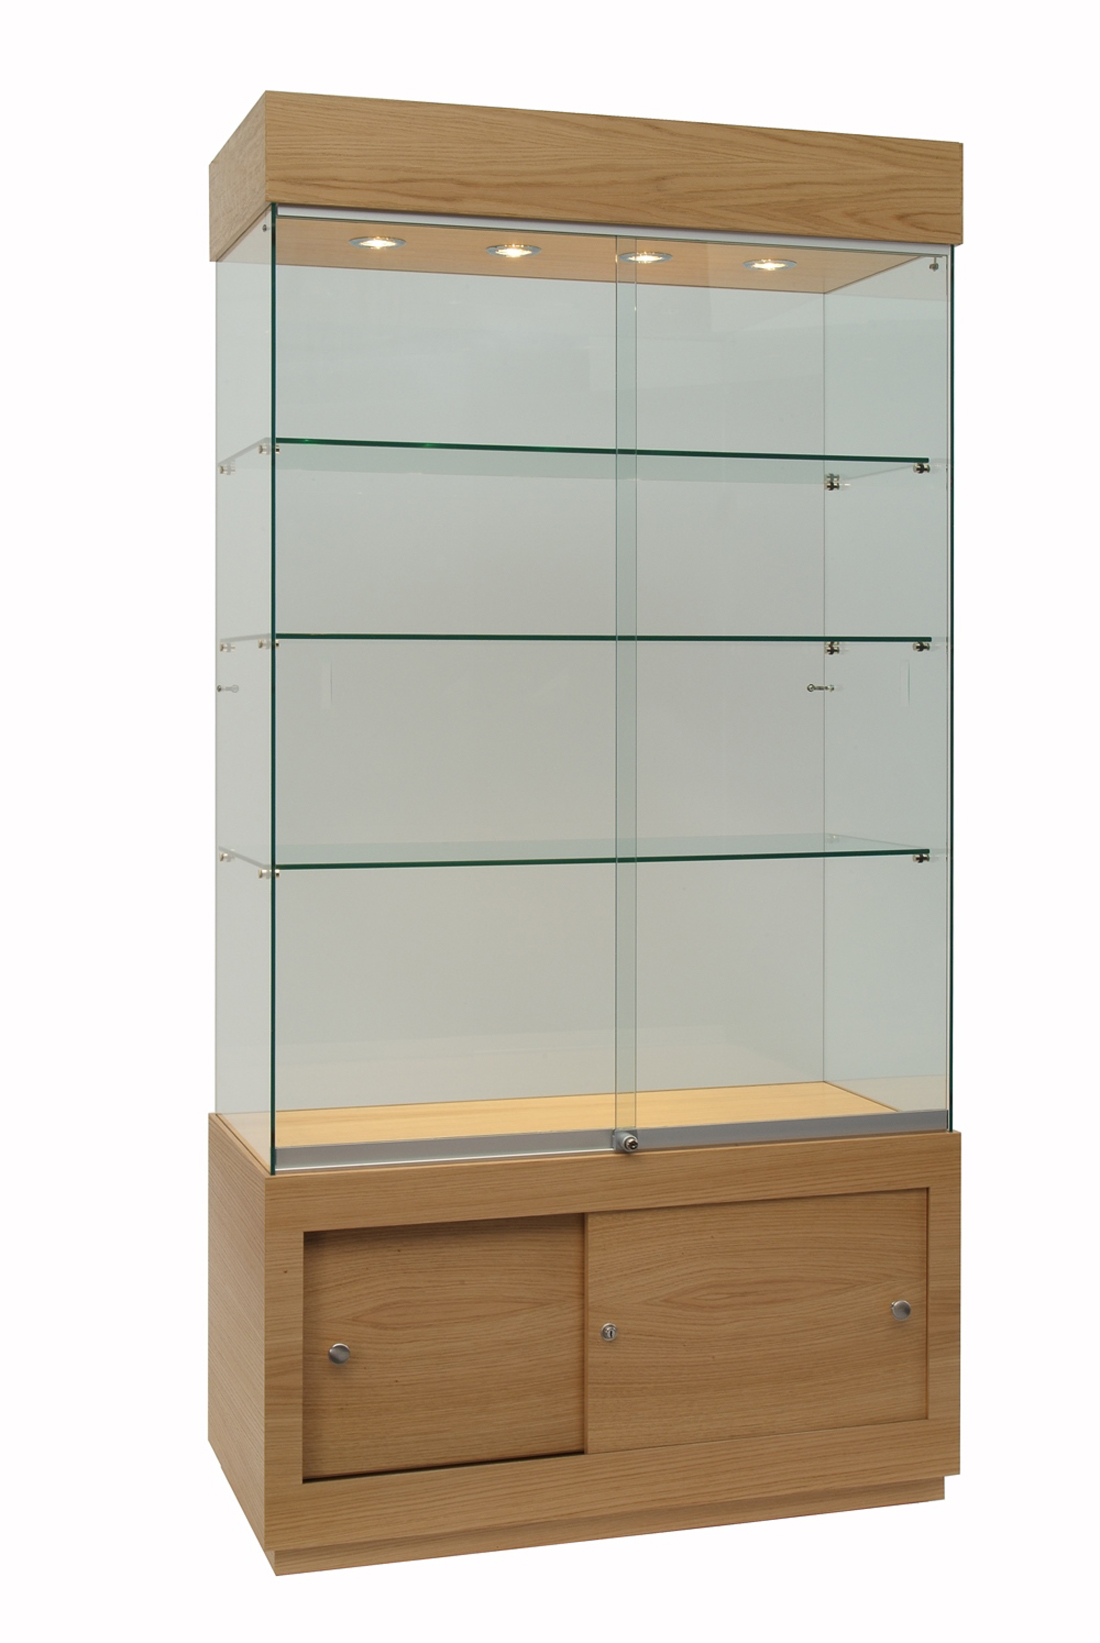 Timber Base Trophy Cabinet - Furniture For Schools